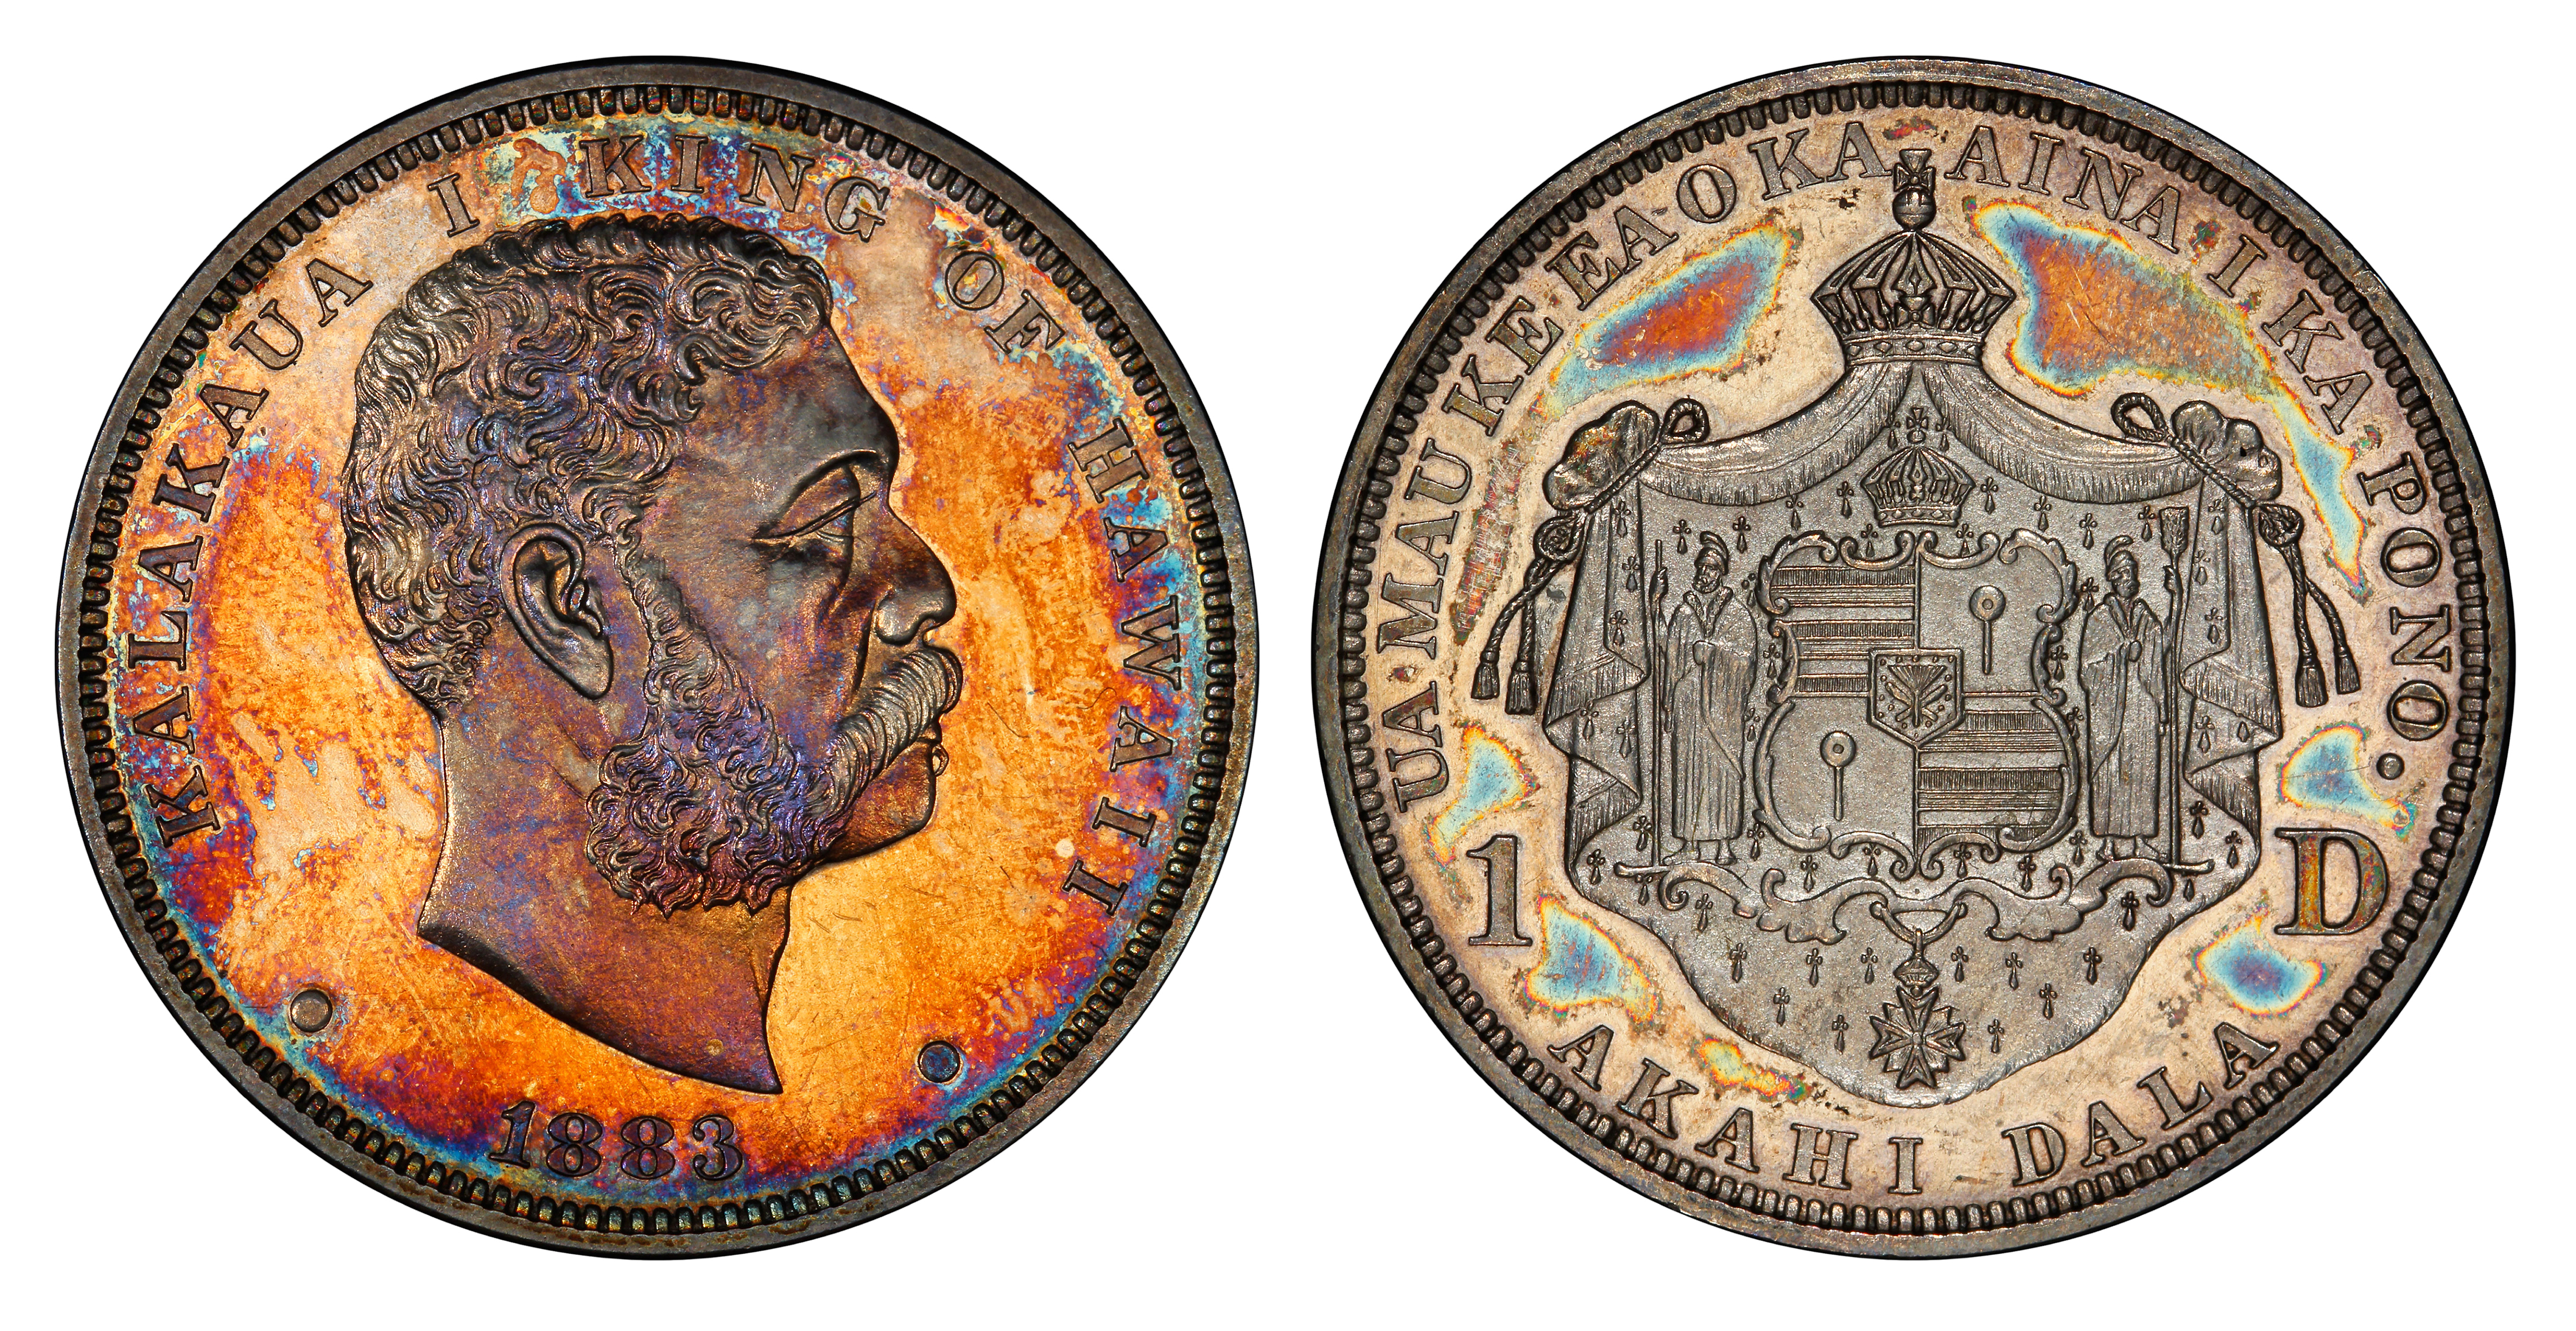 Vintage Hawaii Dollar Honolulu King Kamehameha Coin Belt Buckle - عيادات أبوميزر لطب الأسنان